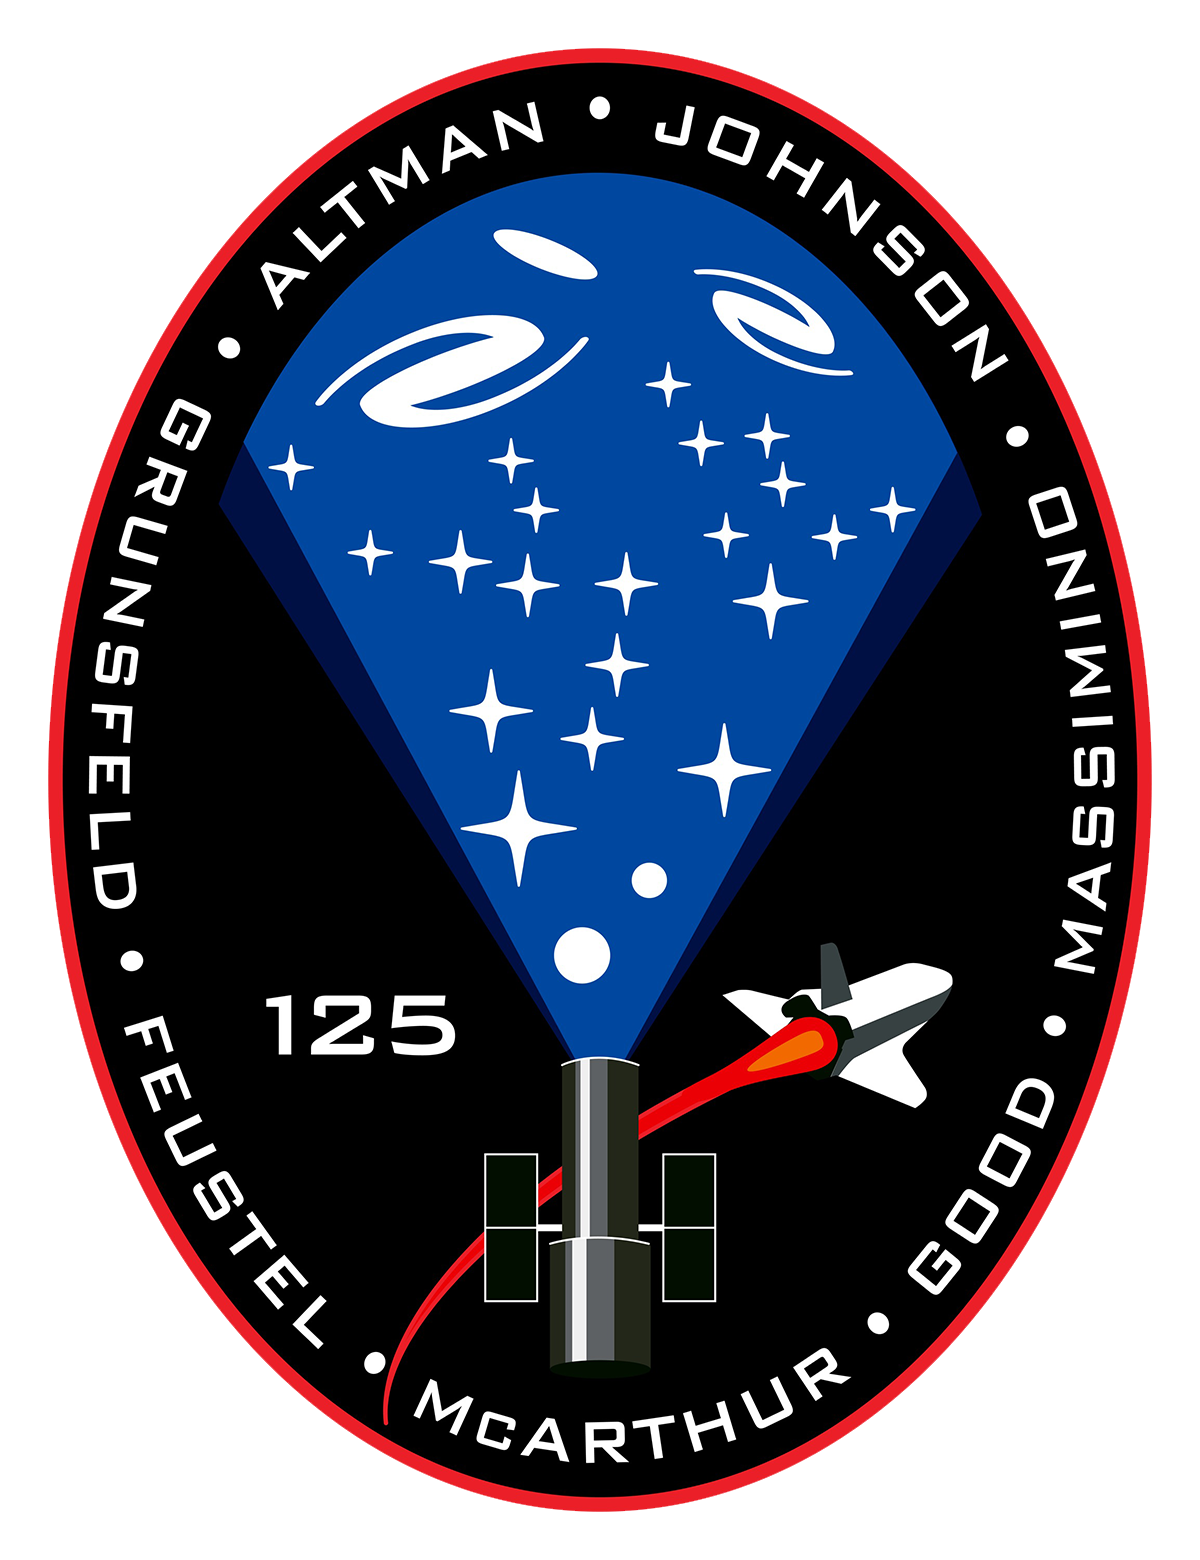 STS-125 (Atlantis)